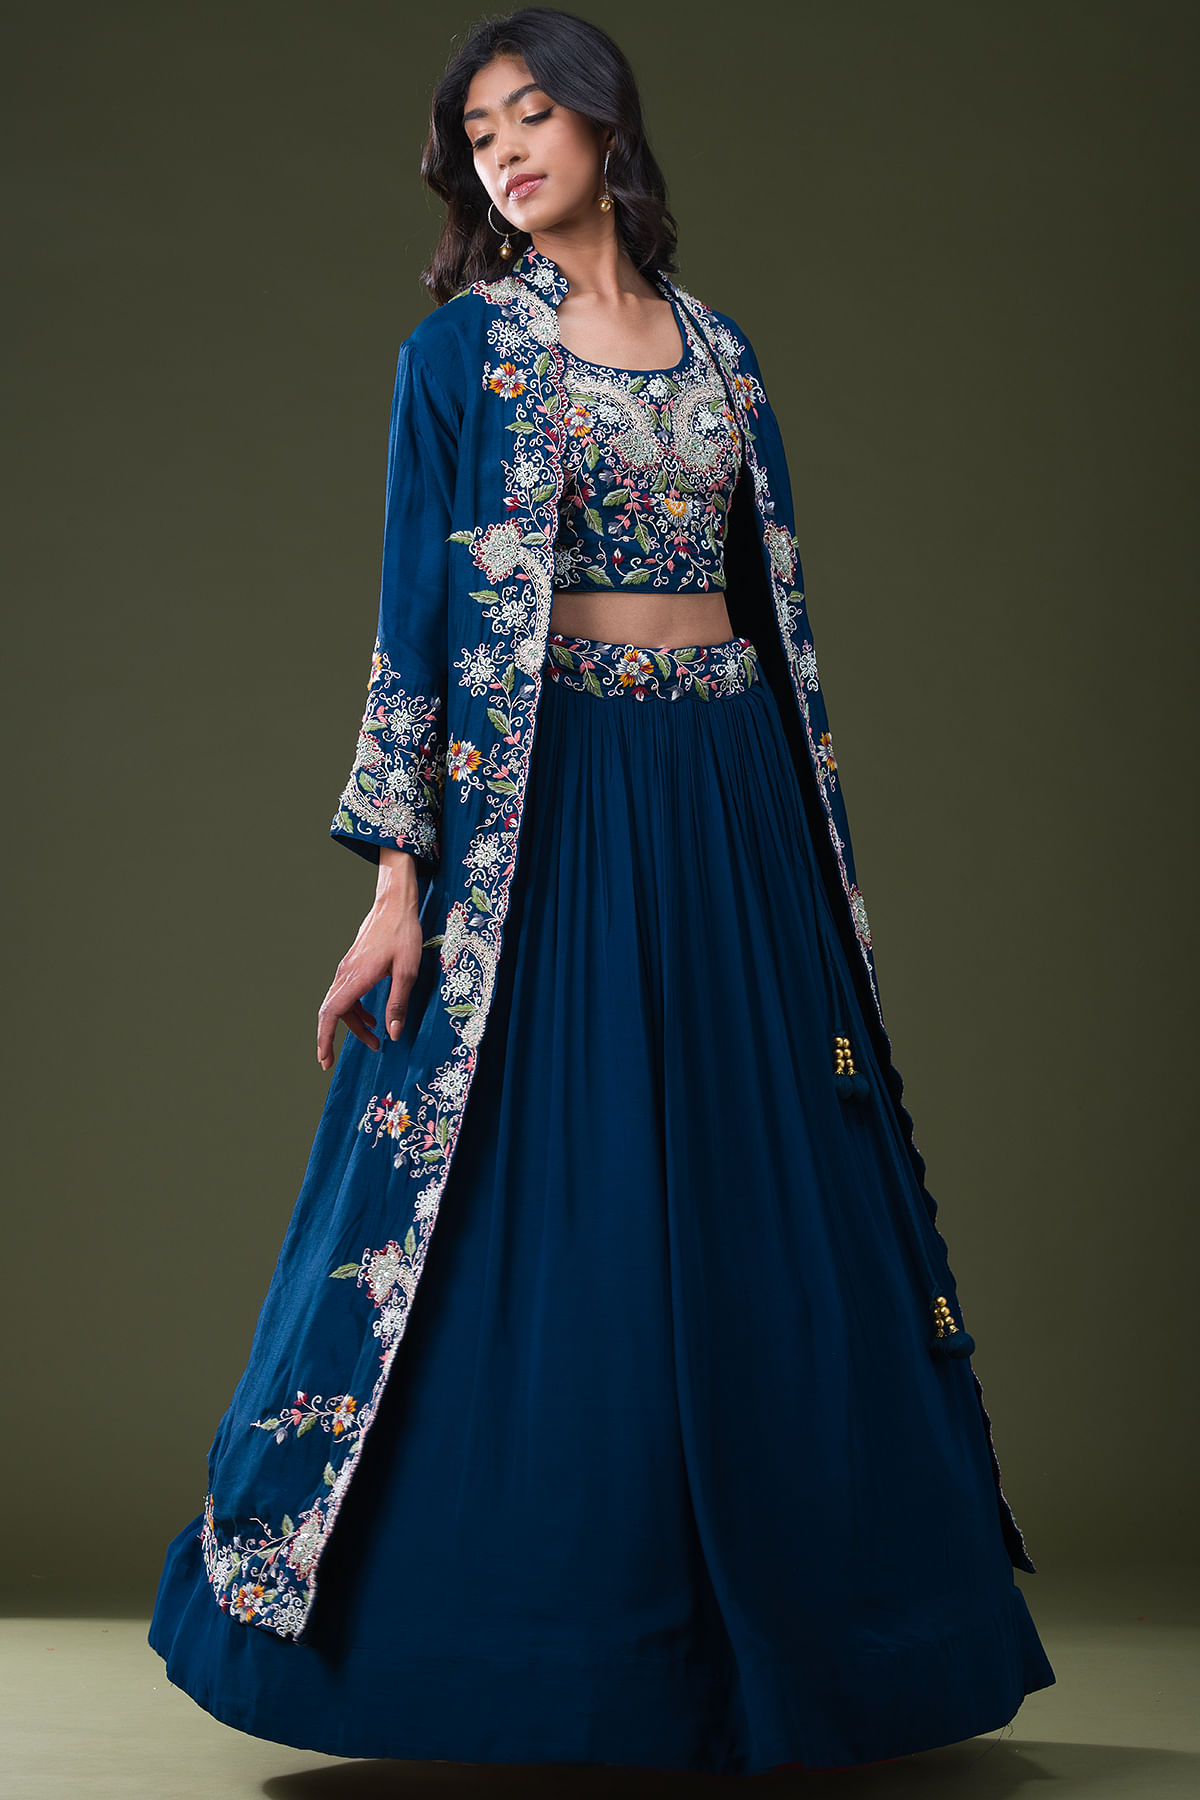 27 + Stunning Jacket Style Lehenga Ideas For A Winter Wedding | Wedding  dresses for girls, Designer dresses indian, Indian gowns dresses